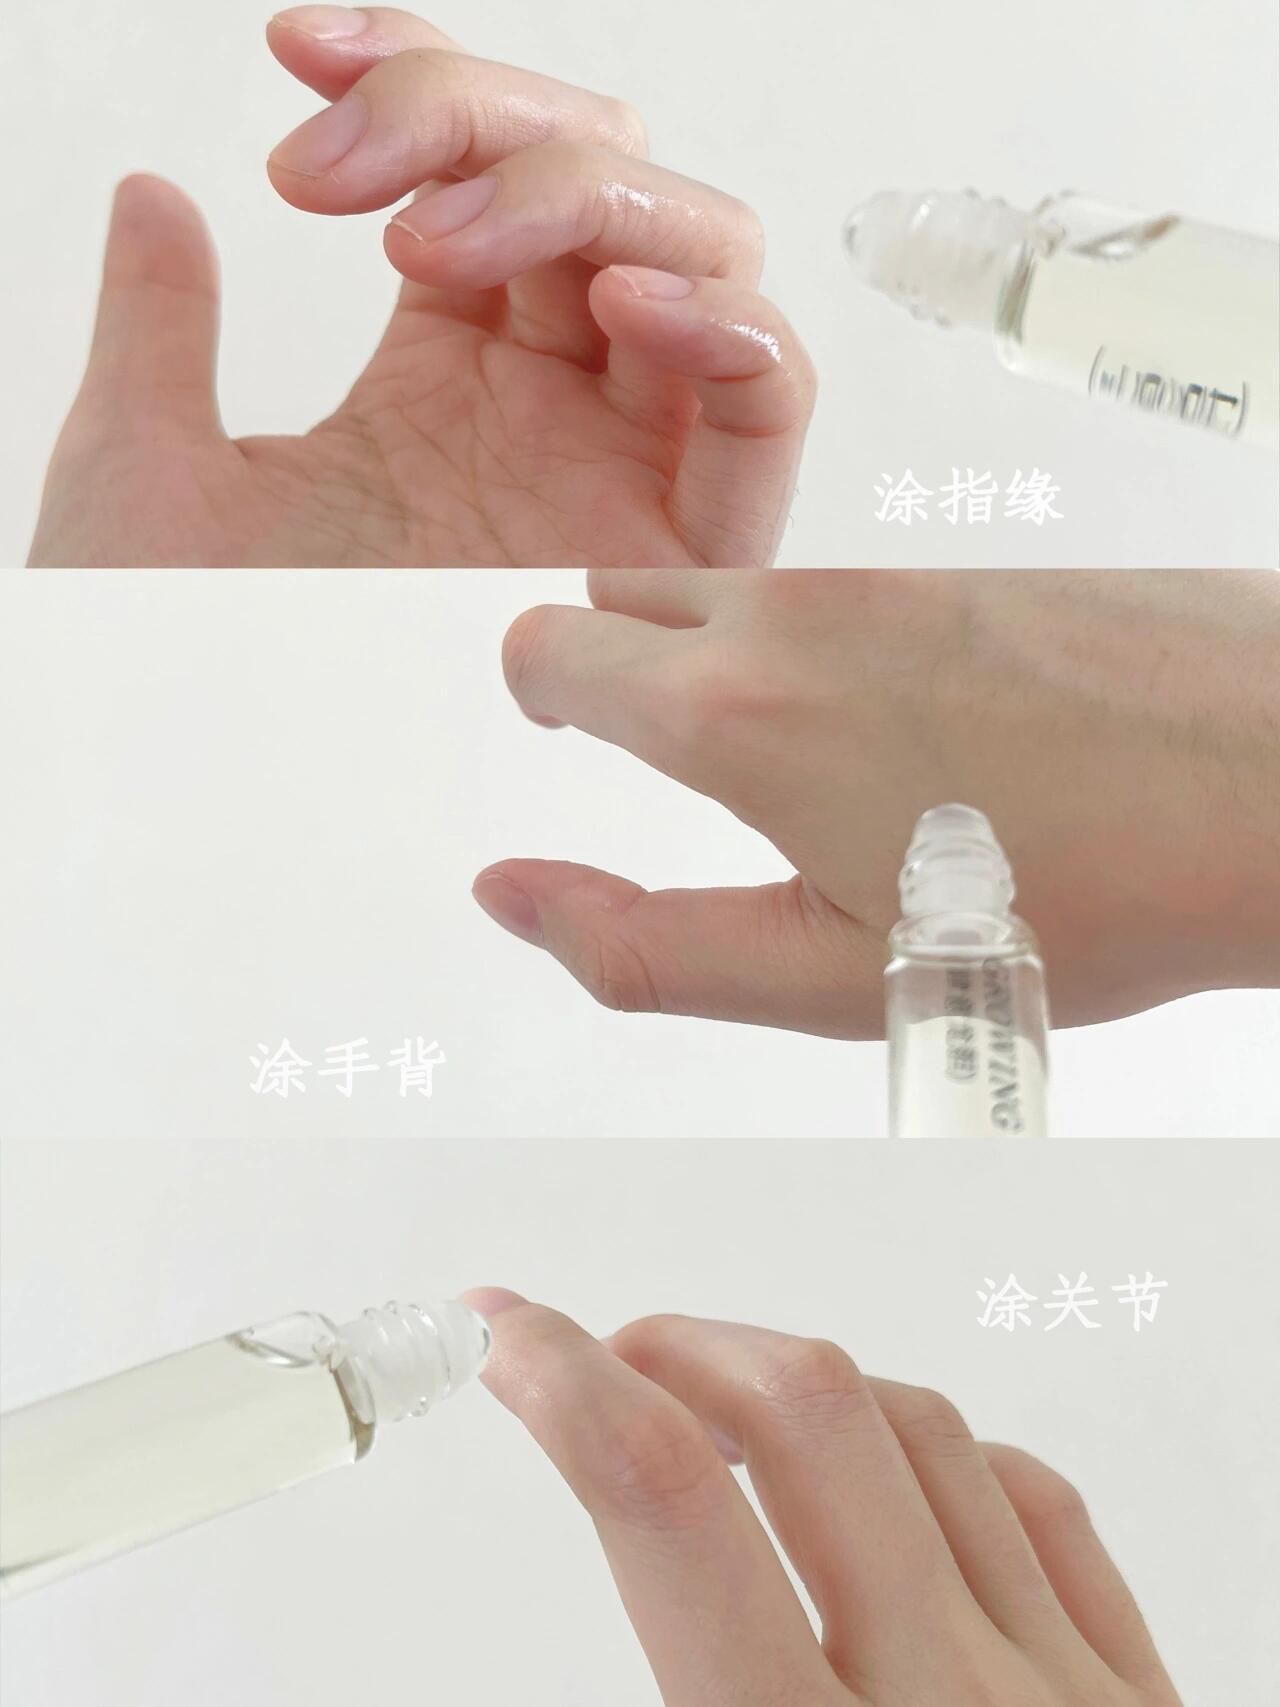 3rd universe Fragrance Moisturizing Hand Care Oil 10ml 第三宇宙香氛滋润护手精油